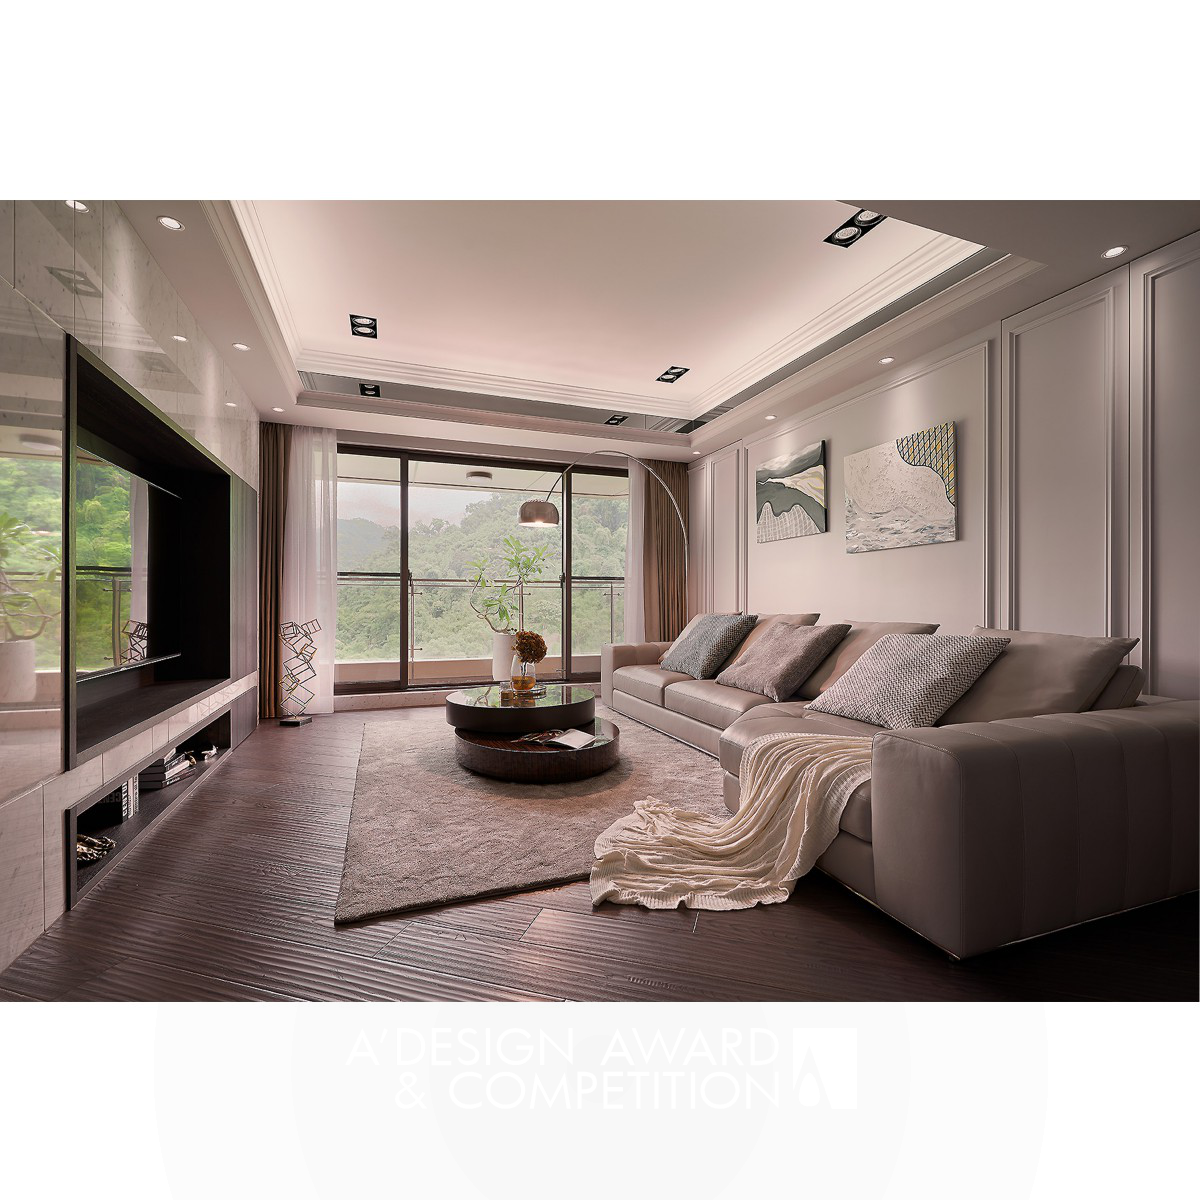 Grandeur Interior Design by Chin-An Yang